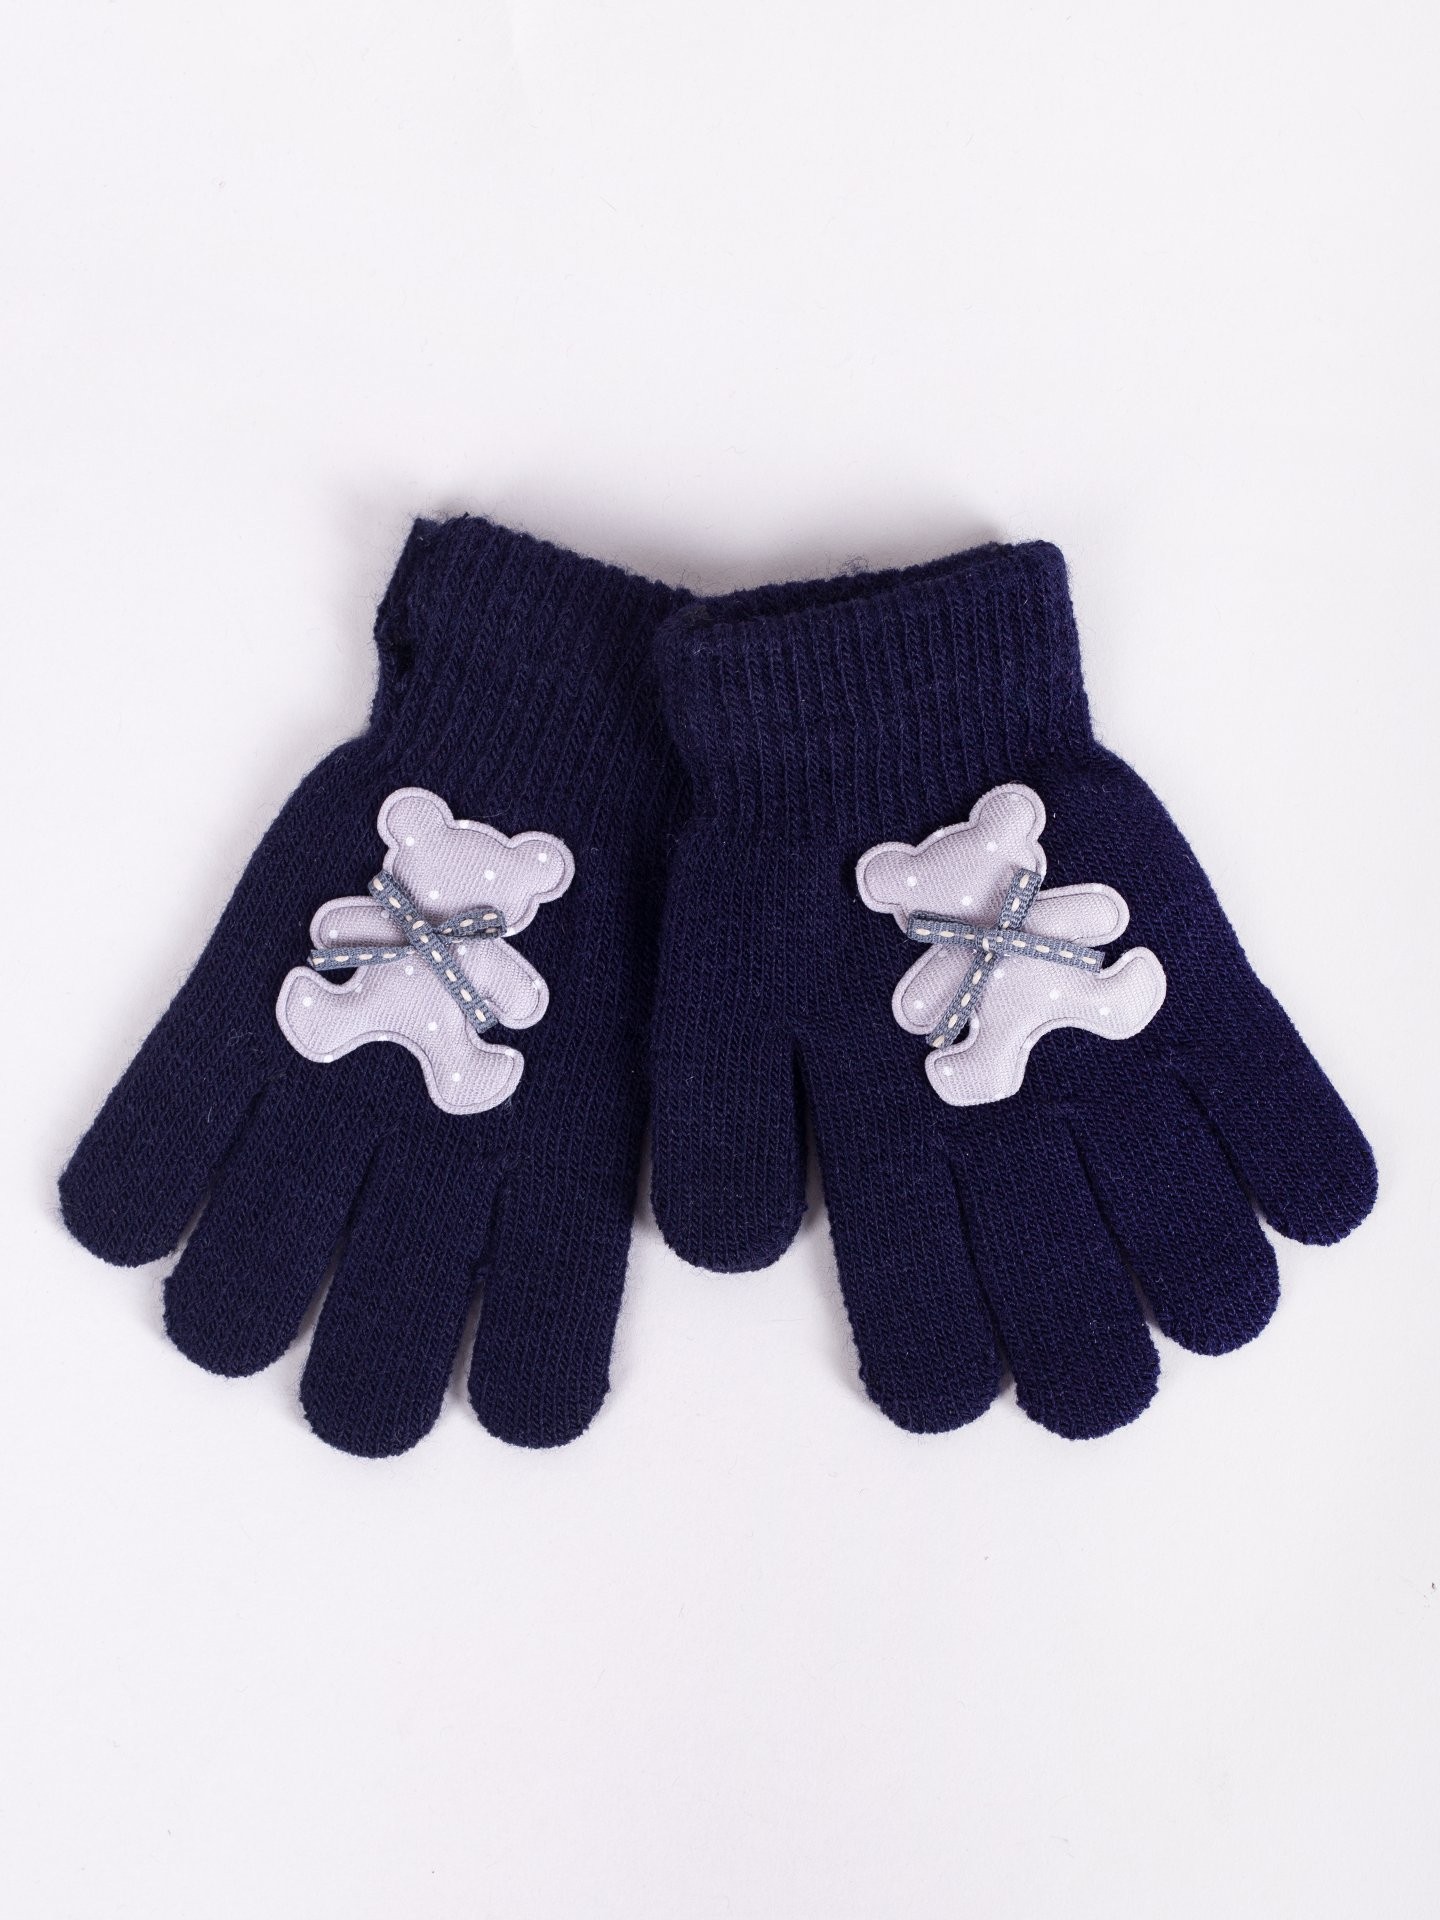 Yoclub Kids's Gloves RED-0235G-AA5B-001 Navy Blue